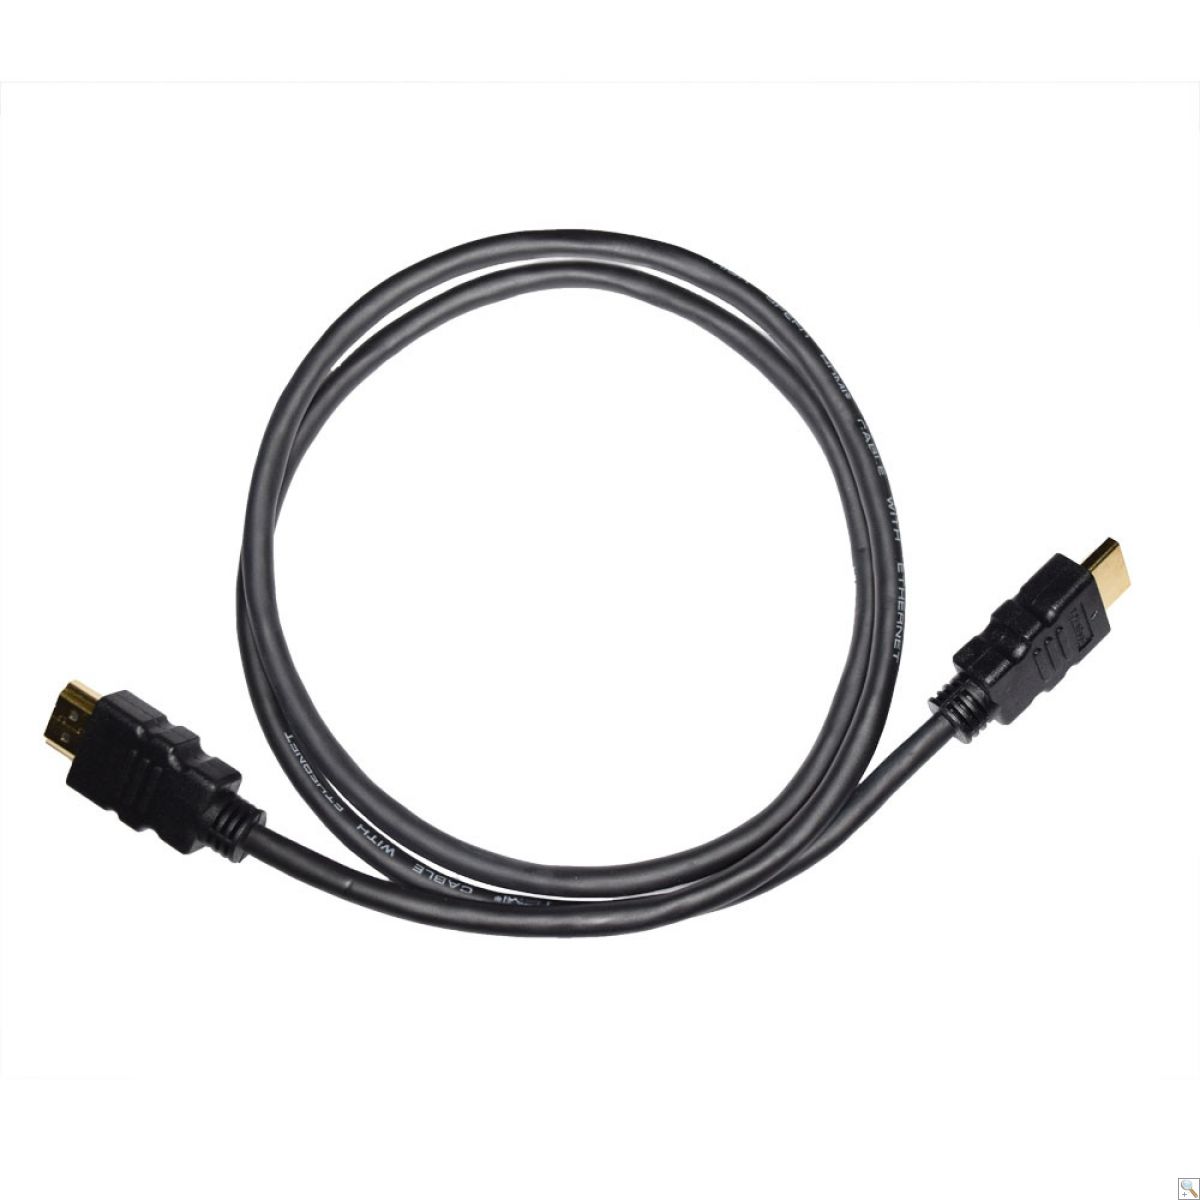 HDMI Cable -10M